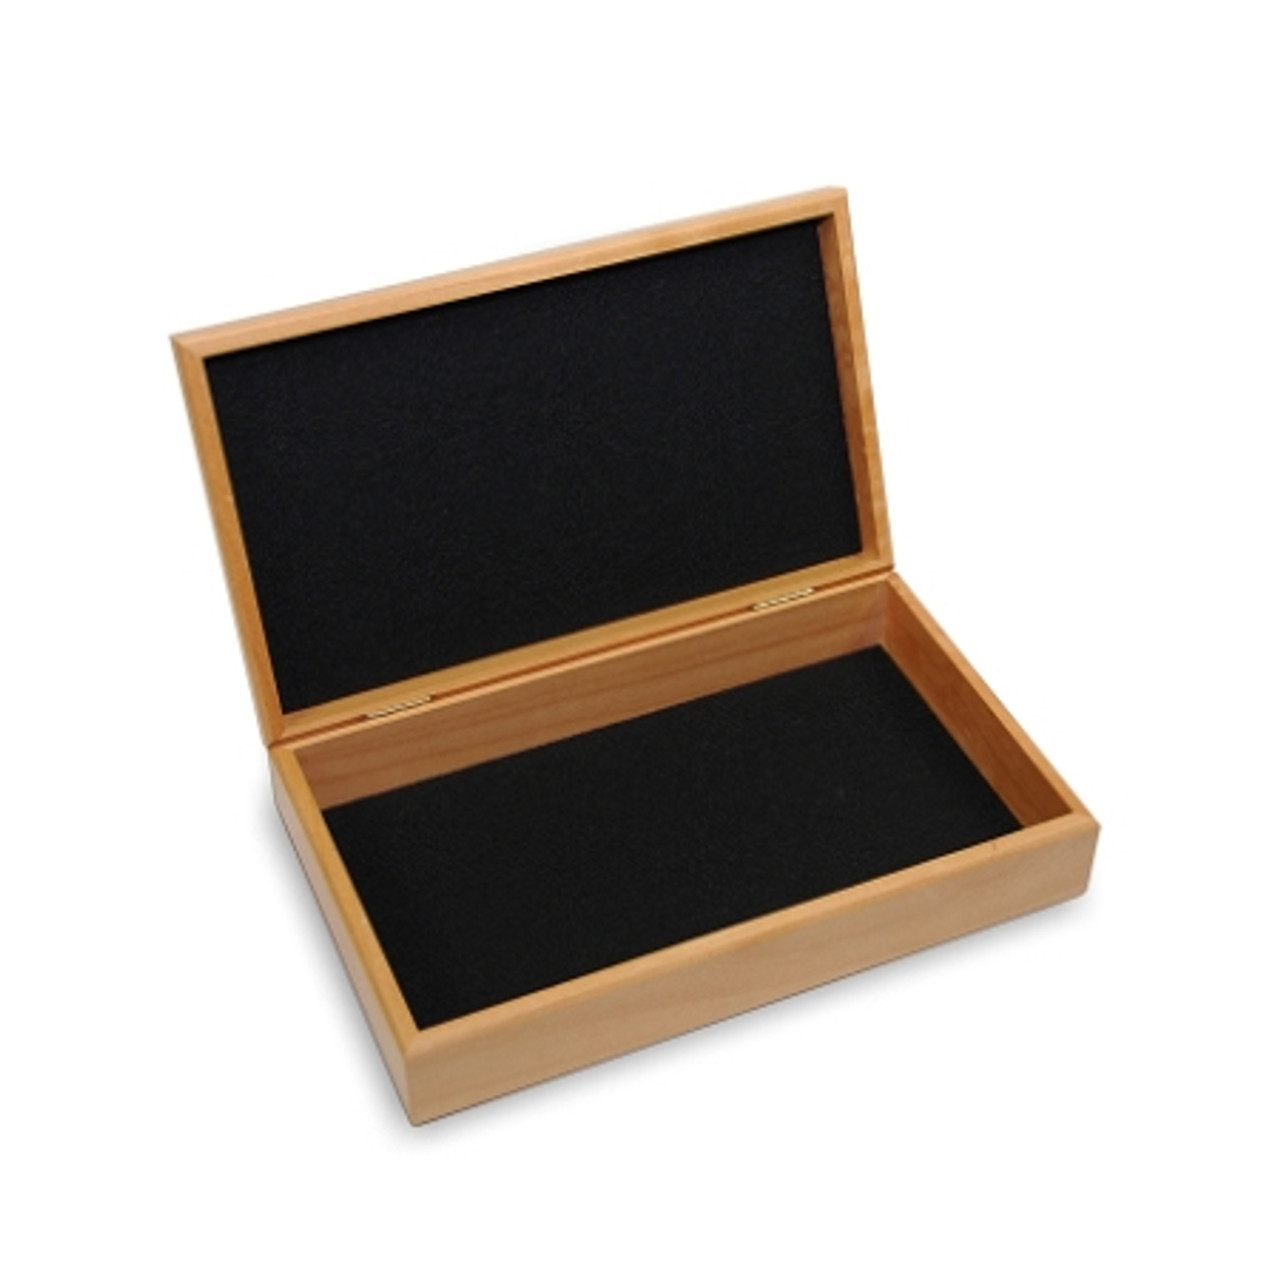 Memory Box Wooden Keepsake Box Wood Box Keepsake Box -   Wedding photo  box, Wedding memory box, Wedding keepsake boxes